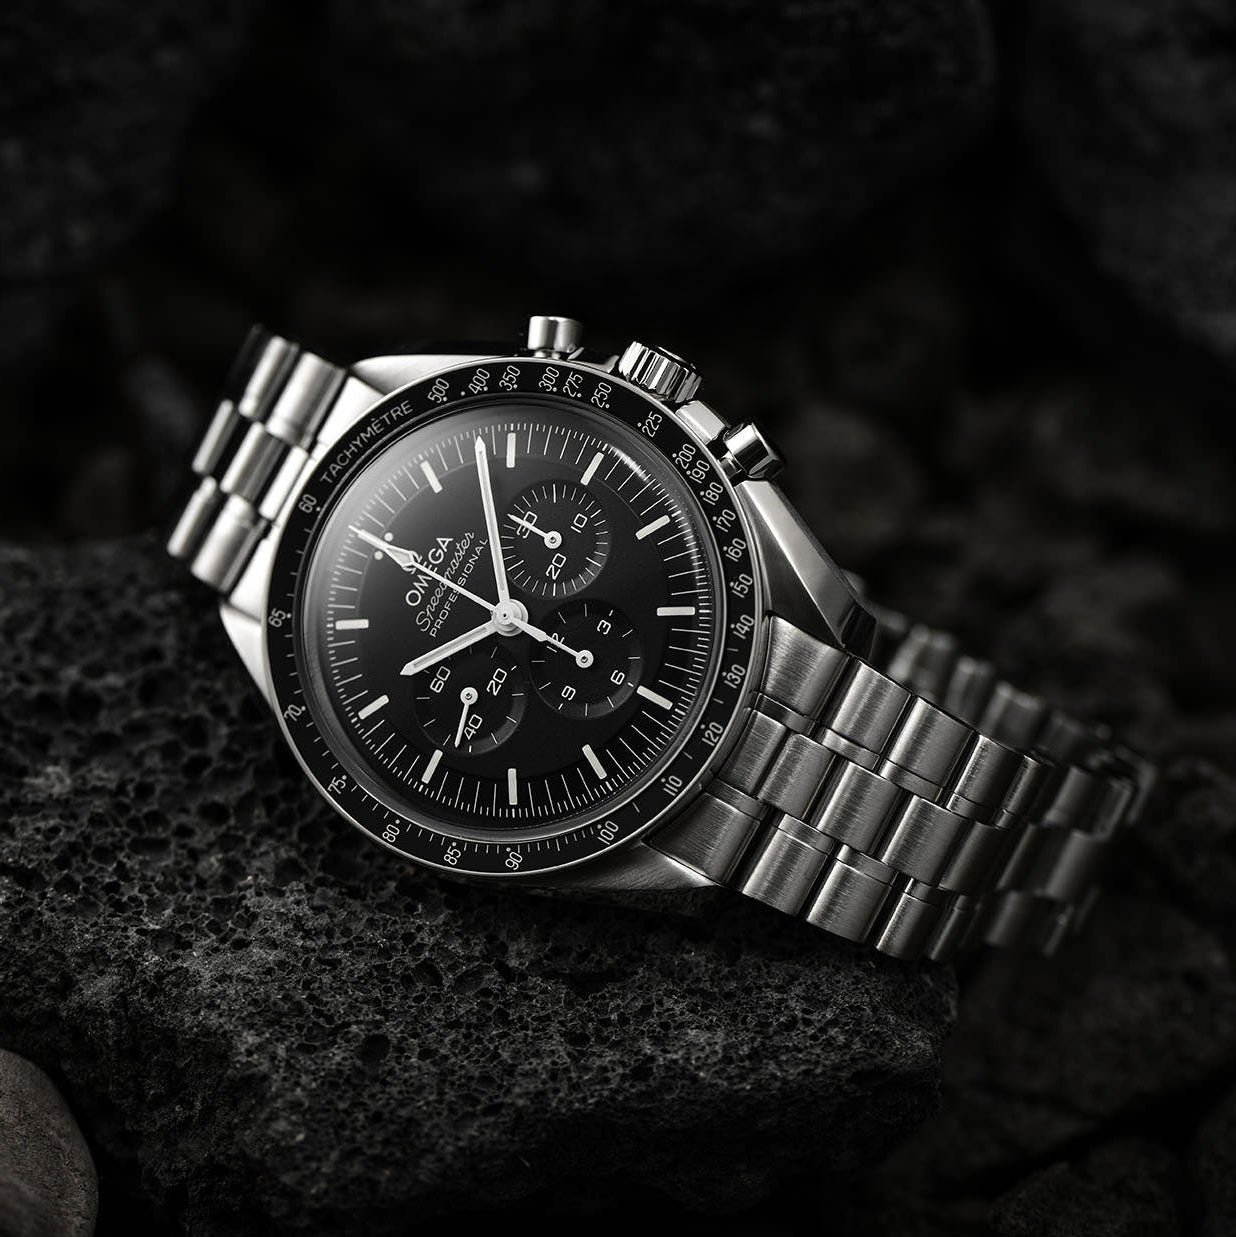 Omega Speedmaster Moonwatch Professional Chronograph Watch